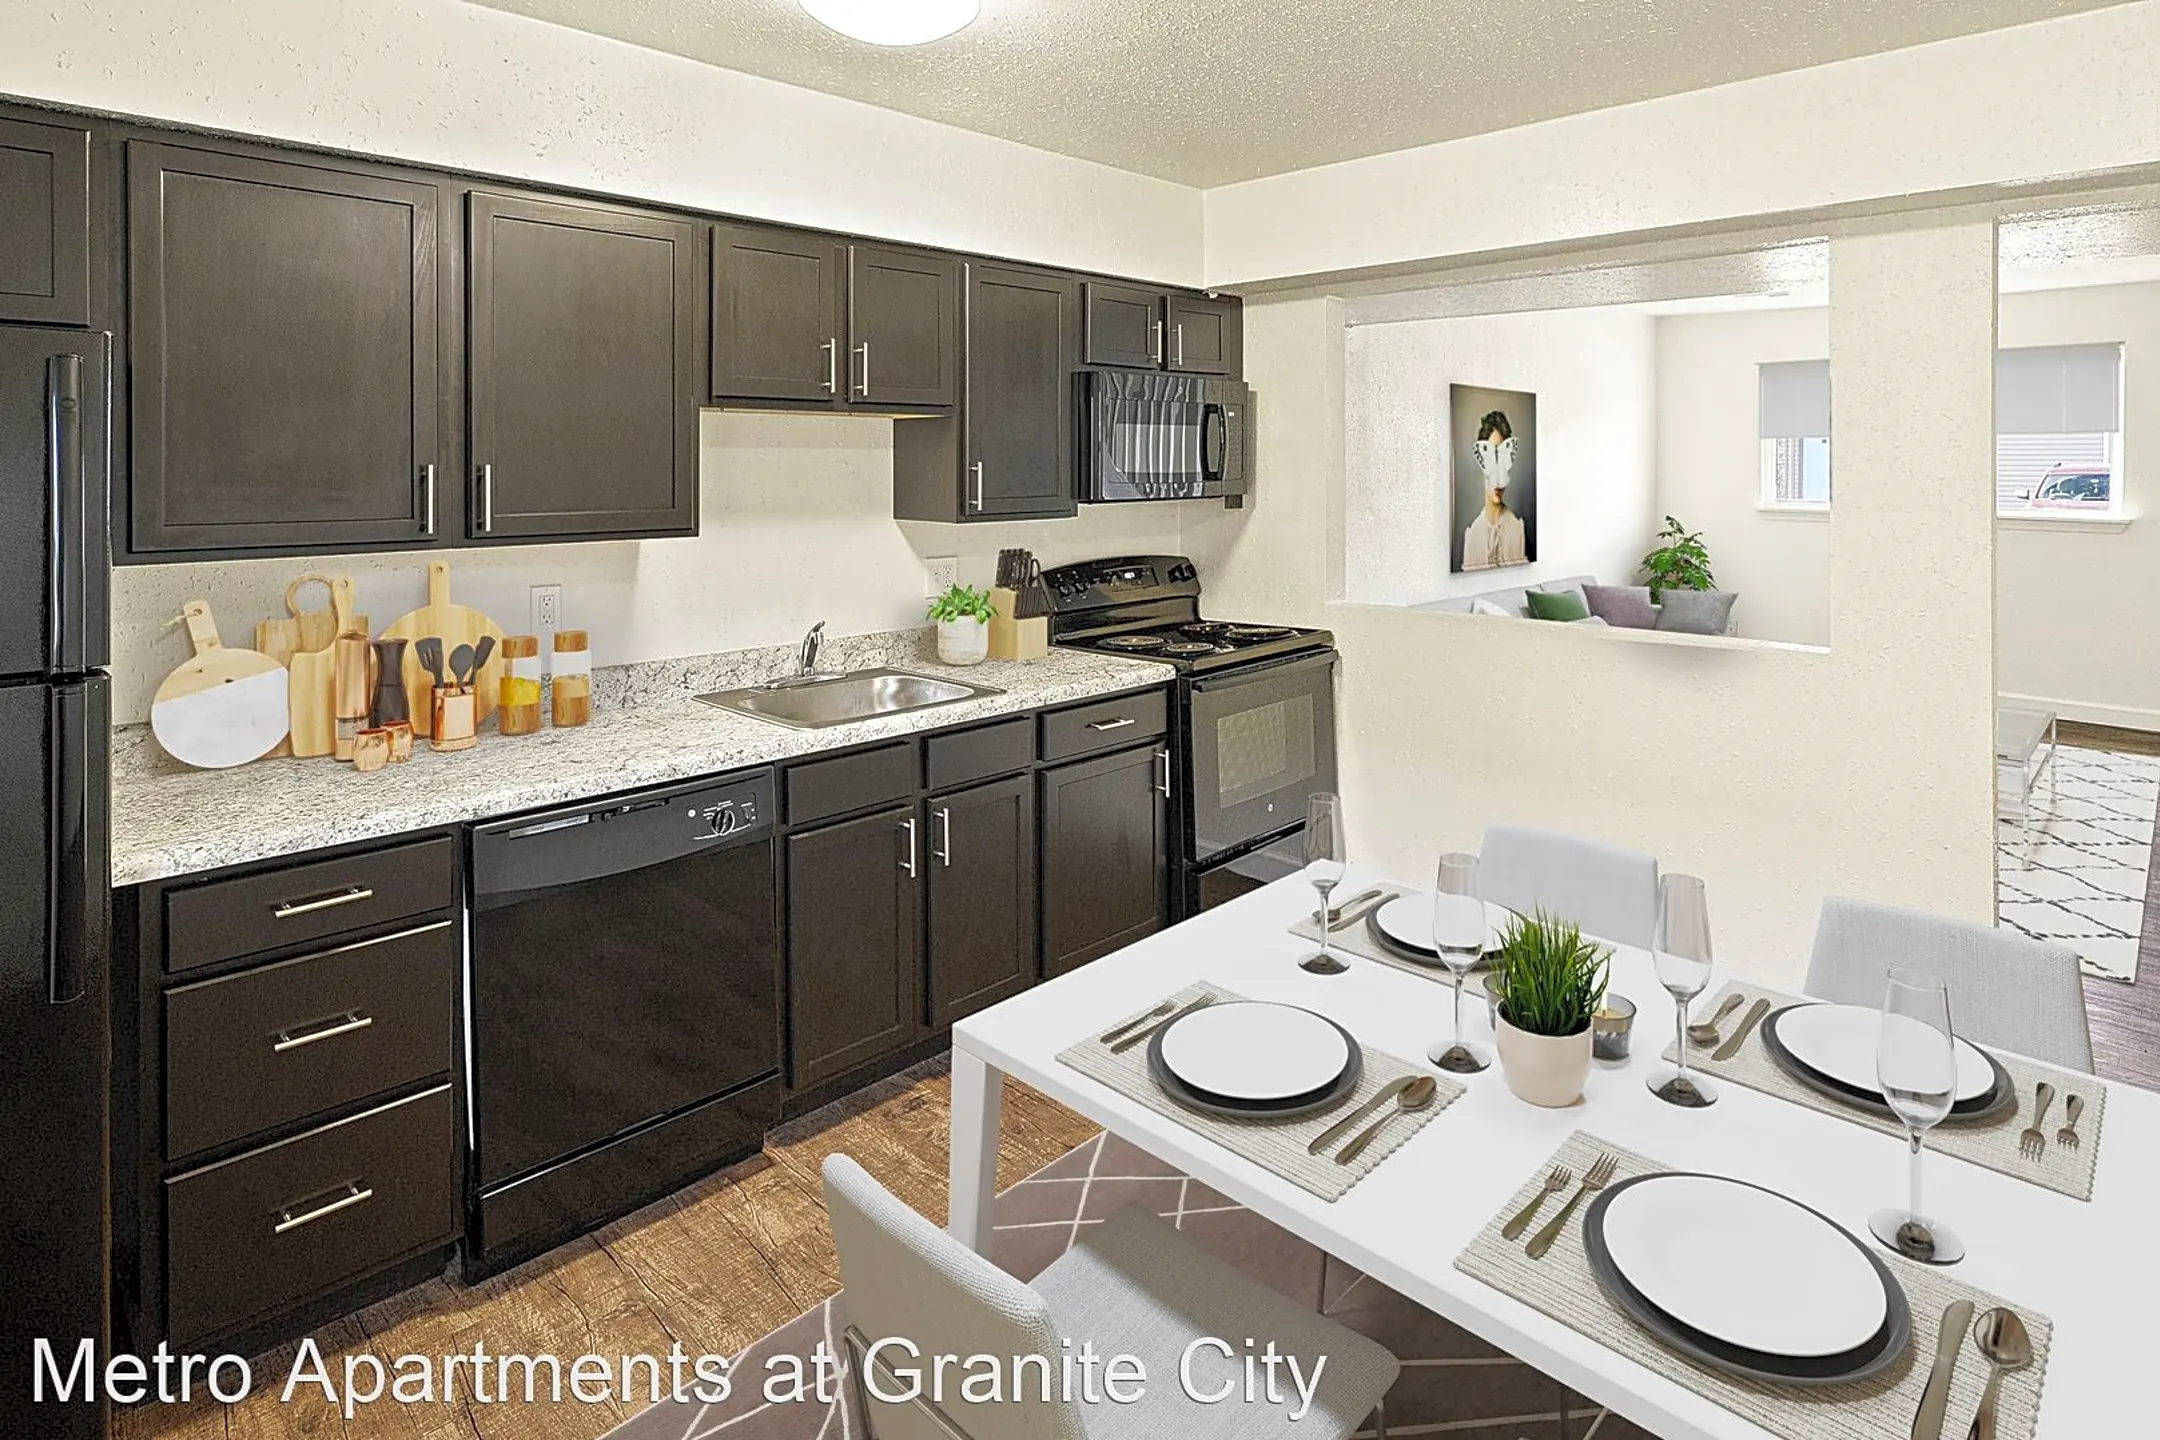 Kitchen - Metro Apartments at Granite City - Granite City, IL